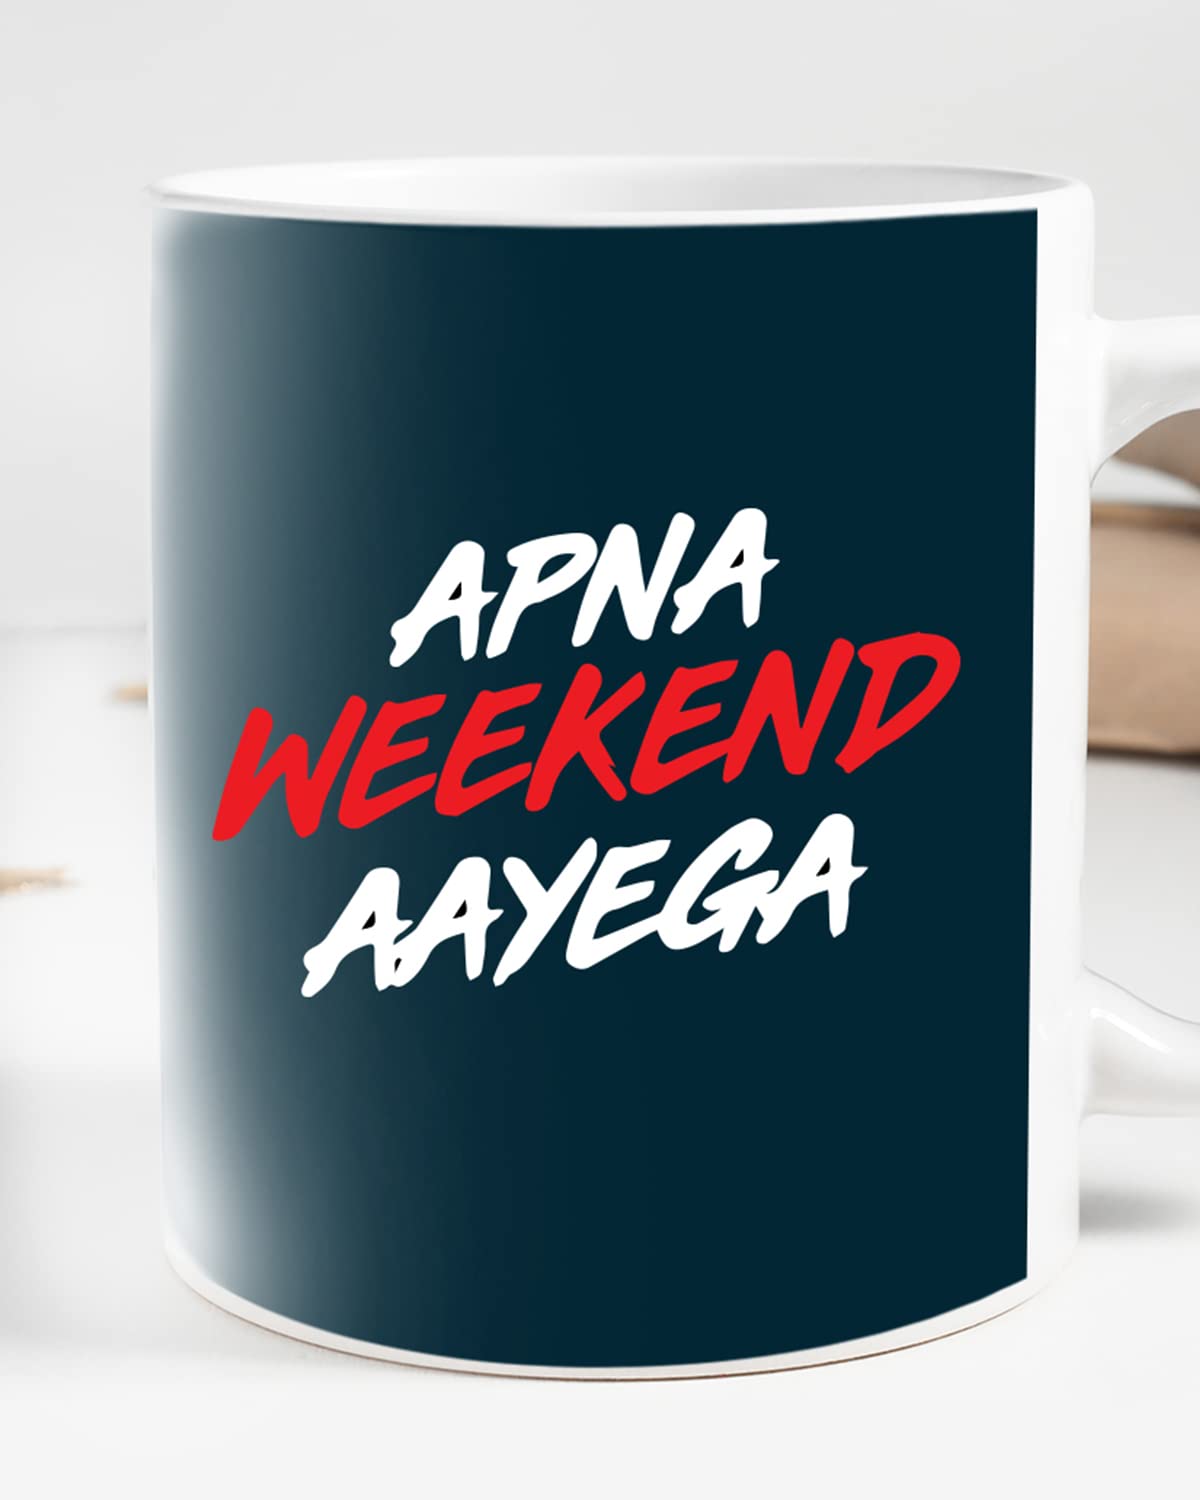 APNA Weekend AAEGA Coffee Mug - Gift for Friend, Birthday Gift, Birthday Mug, Motivational Quotes Mug, Mugs with Funny & Funky Dialogues, Bollywood Mugs, Funny Mugs for Him & Her